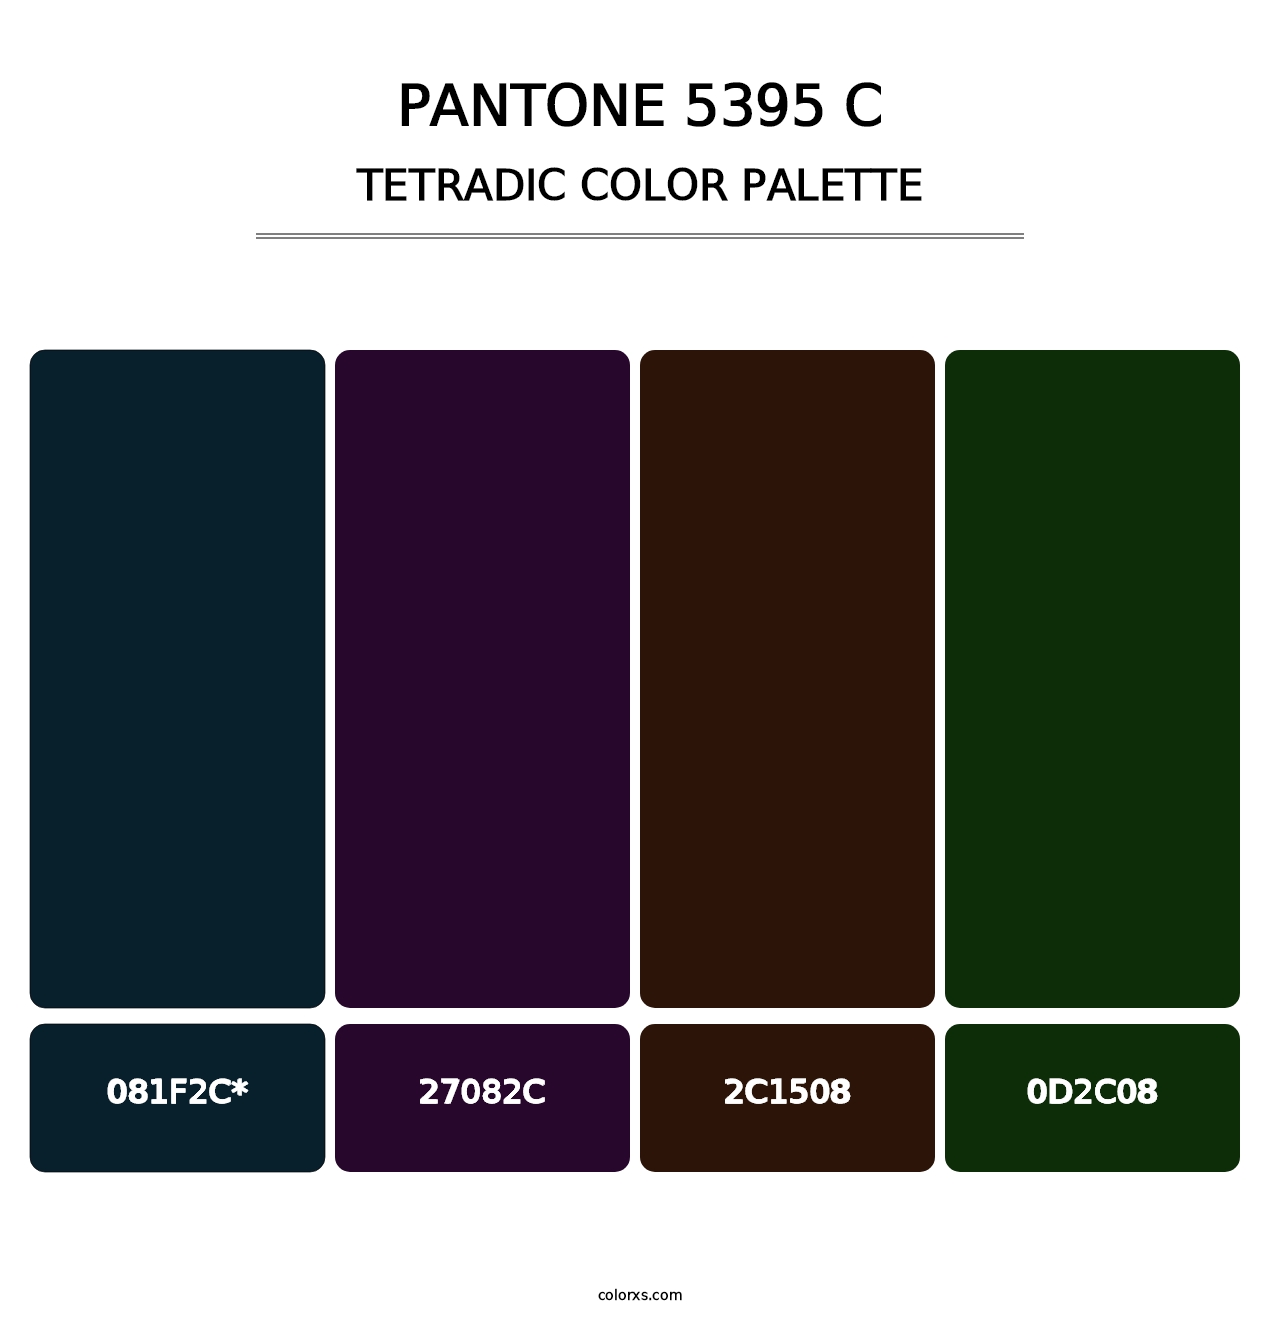 PANTONE 5395 C - Tetradic Color Palette